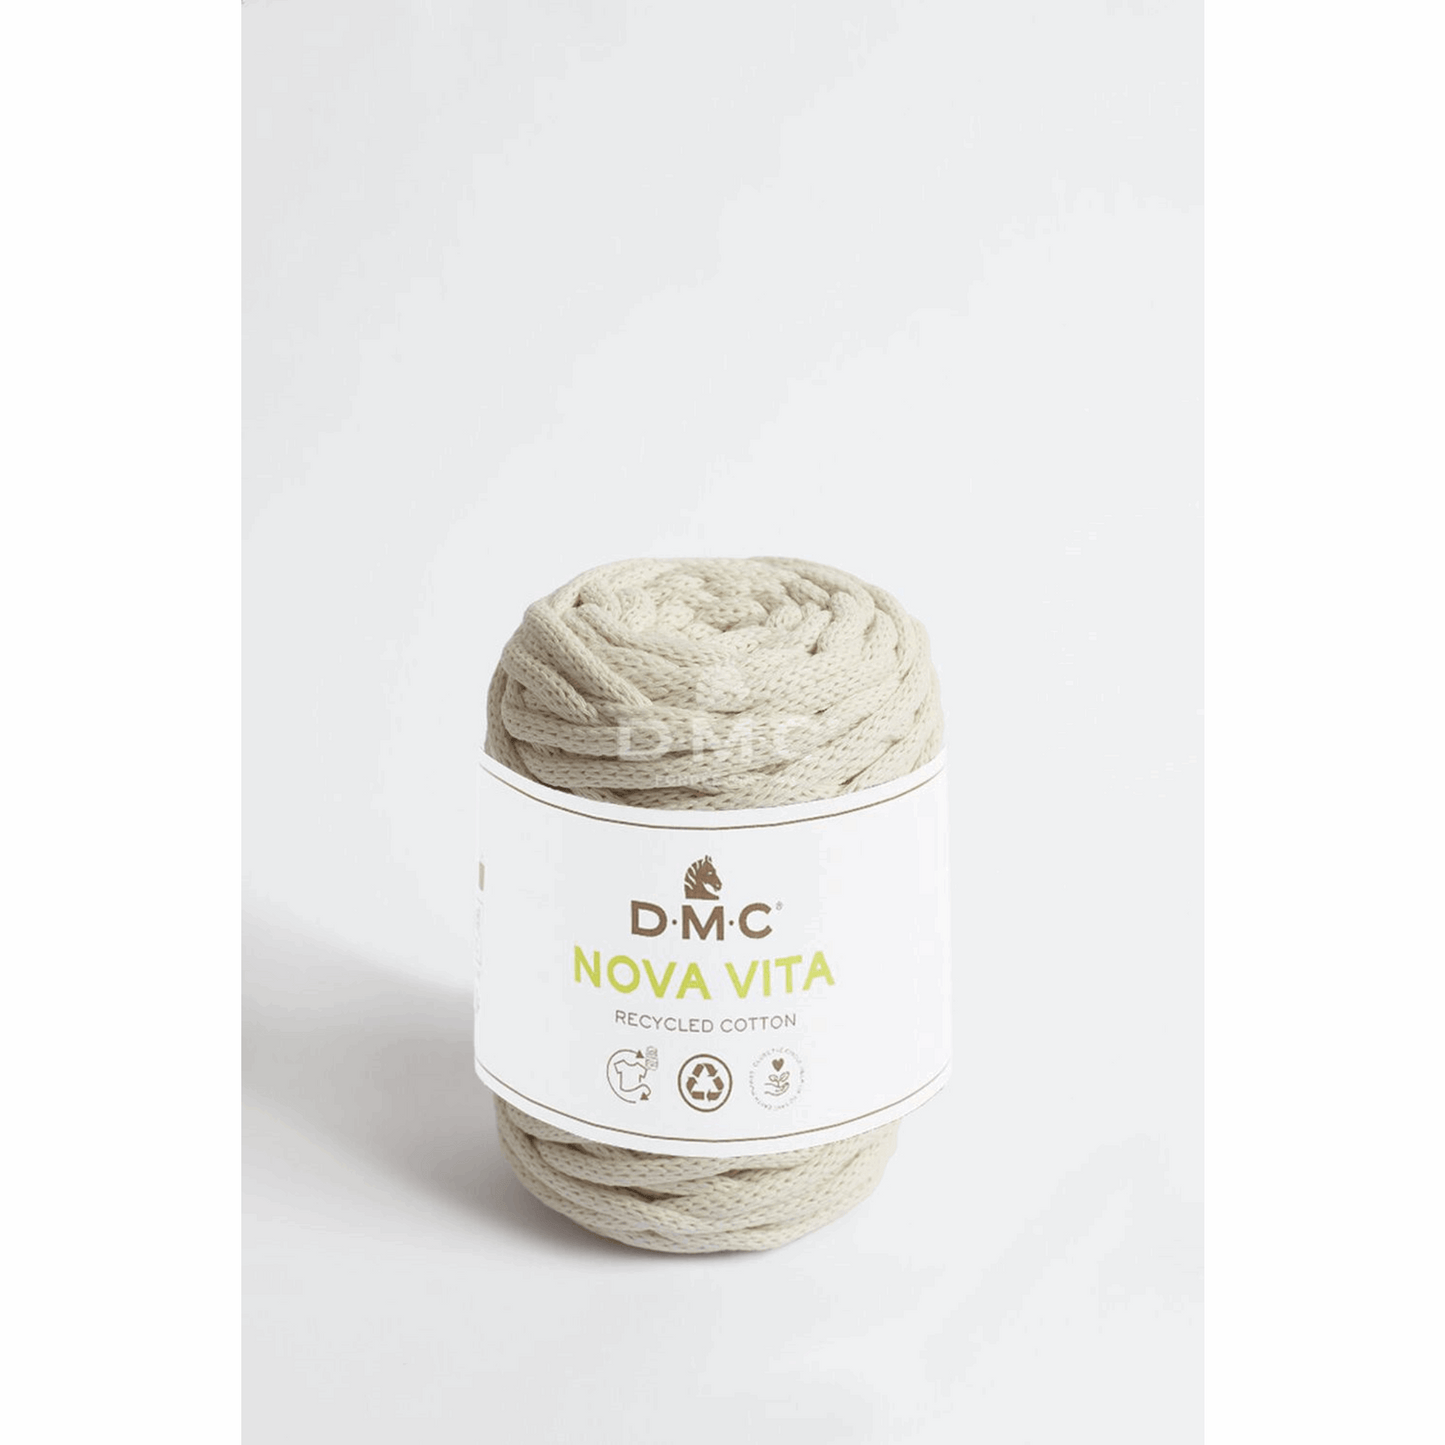 DMC Nova Vita recycled cotton, natur, 95000, Farbe 31